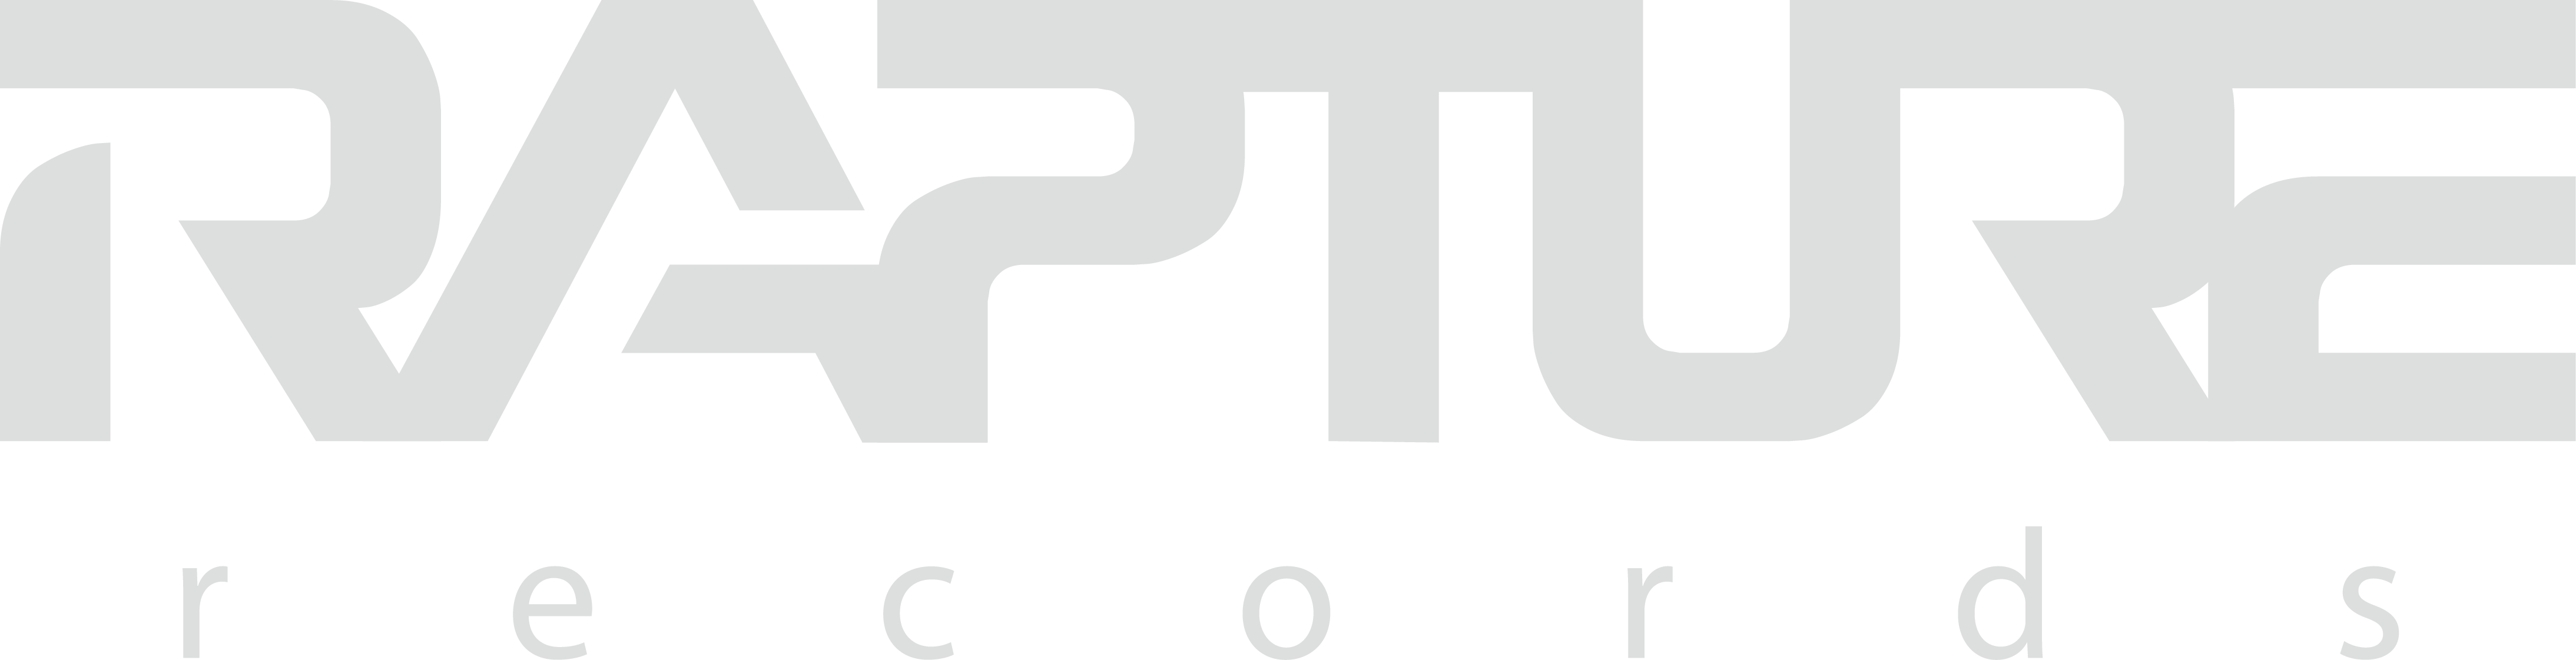 Rapture logo